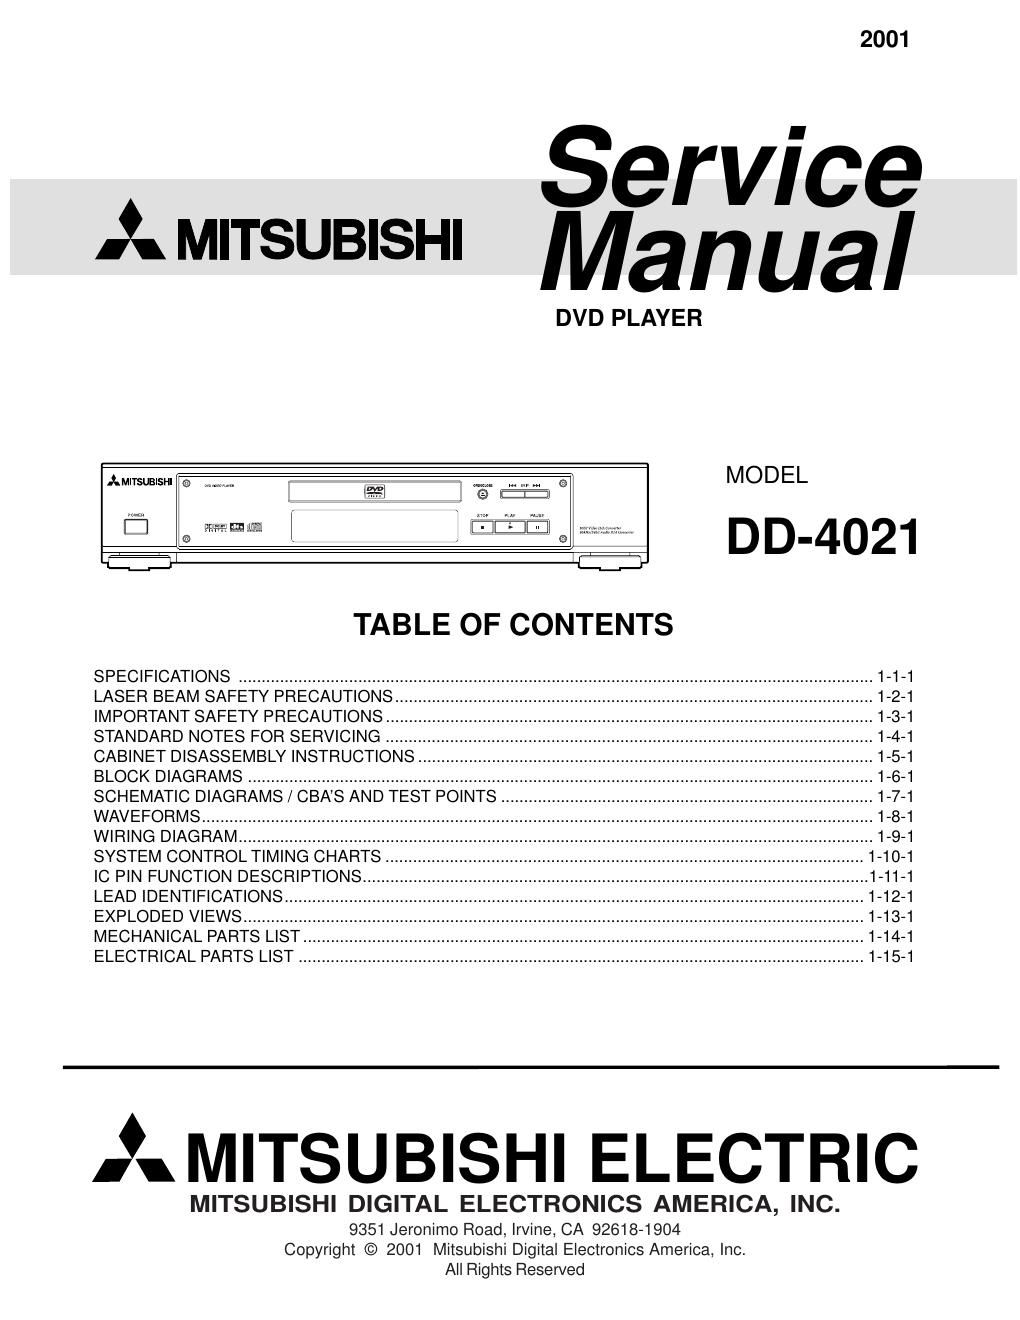 mitsubishi dd 4021 service